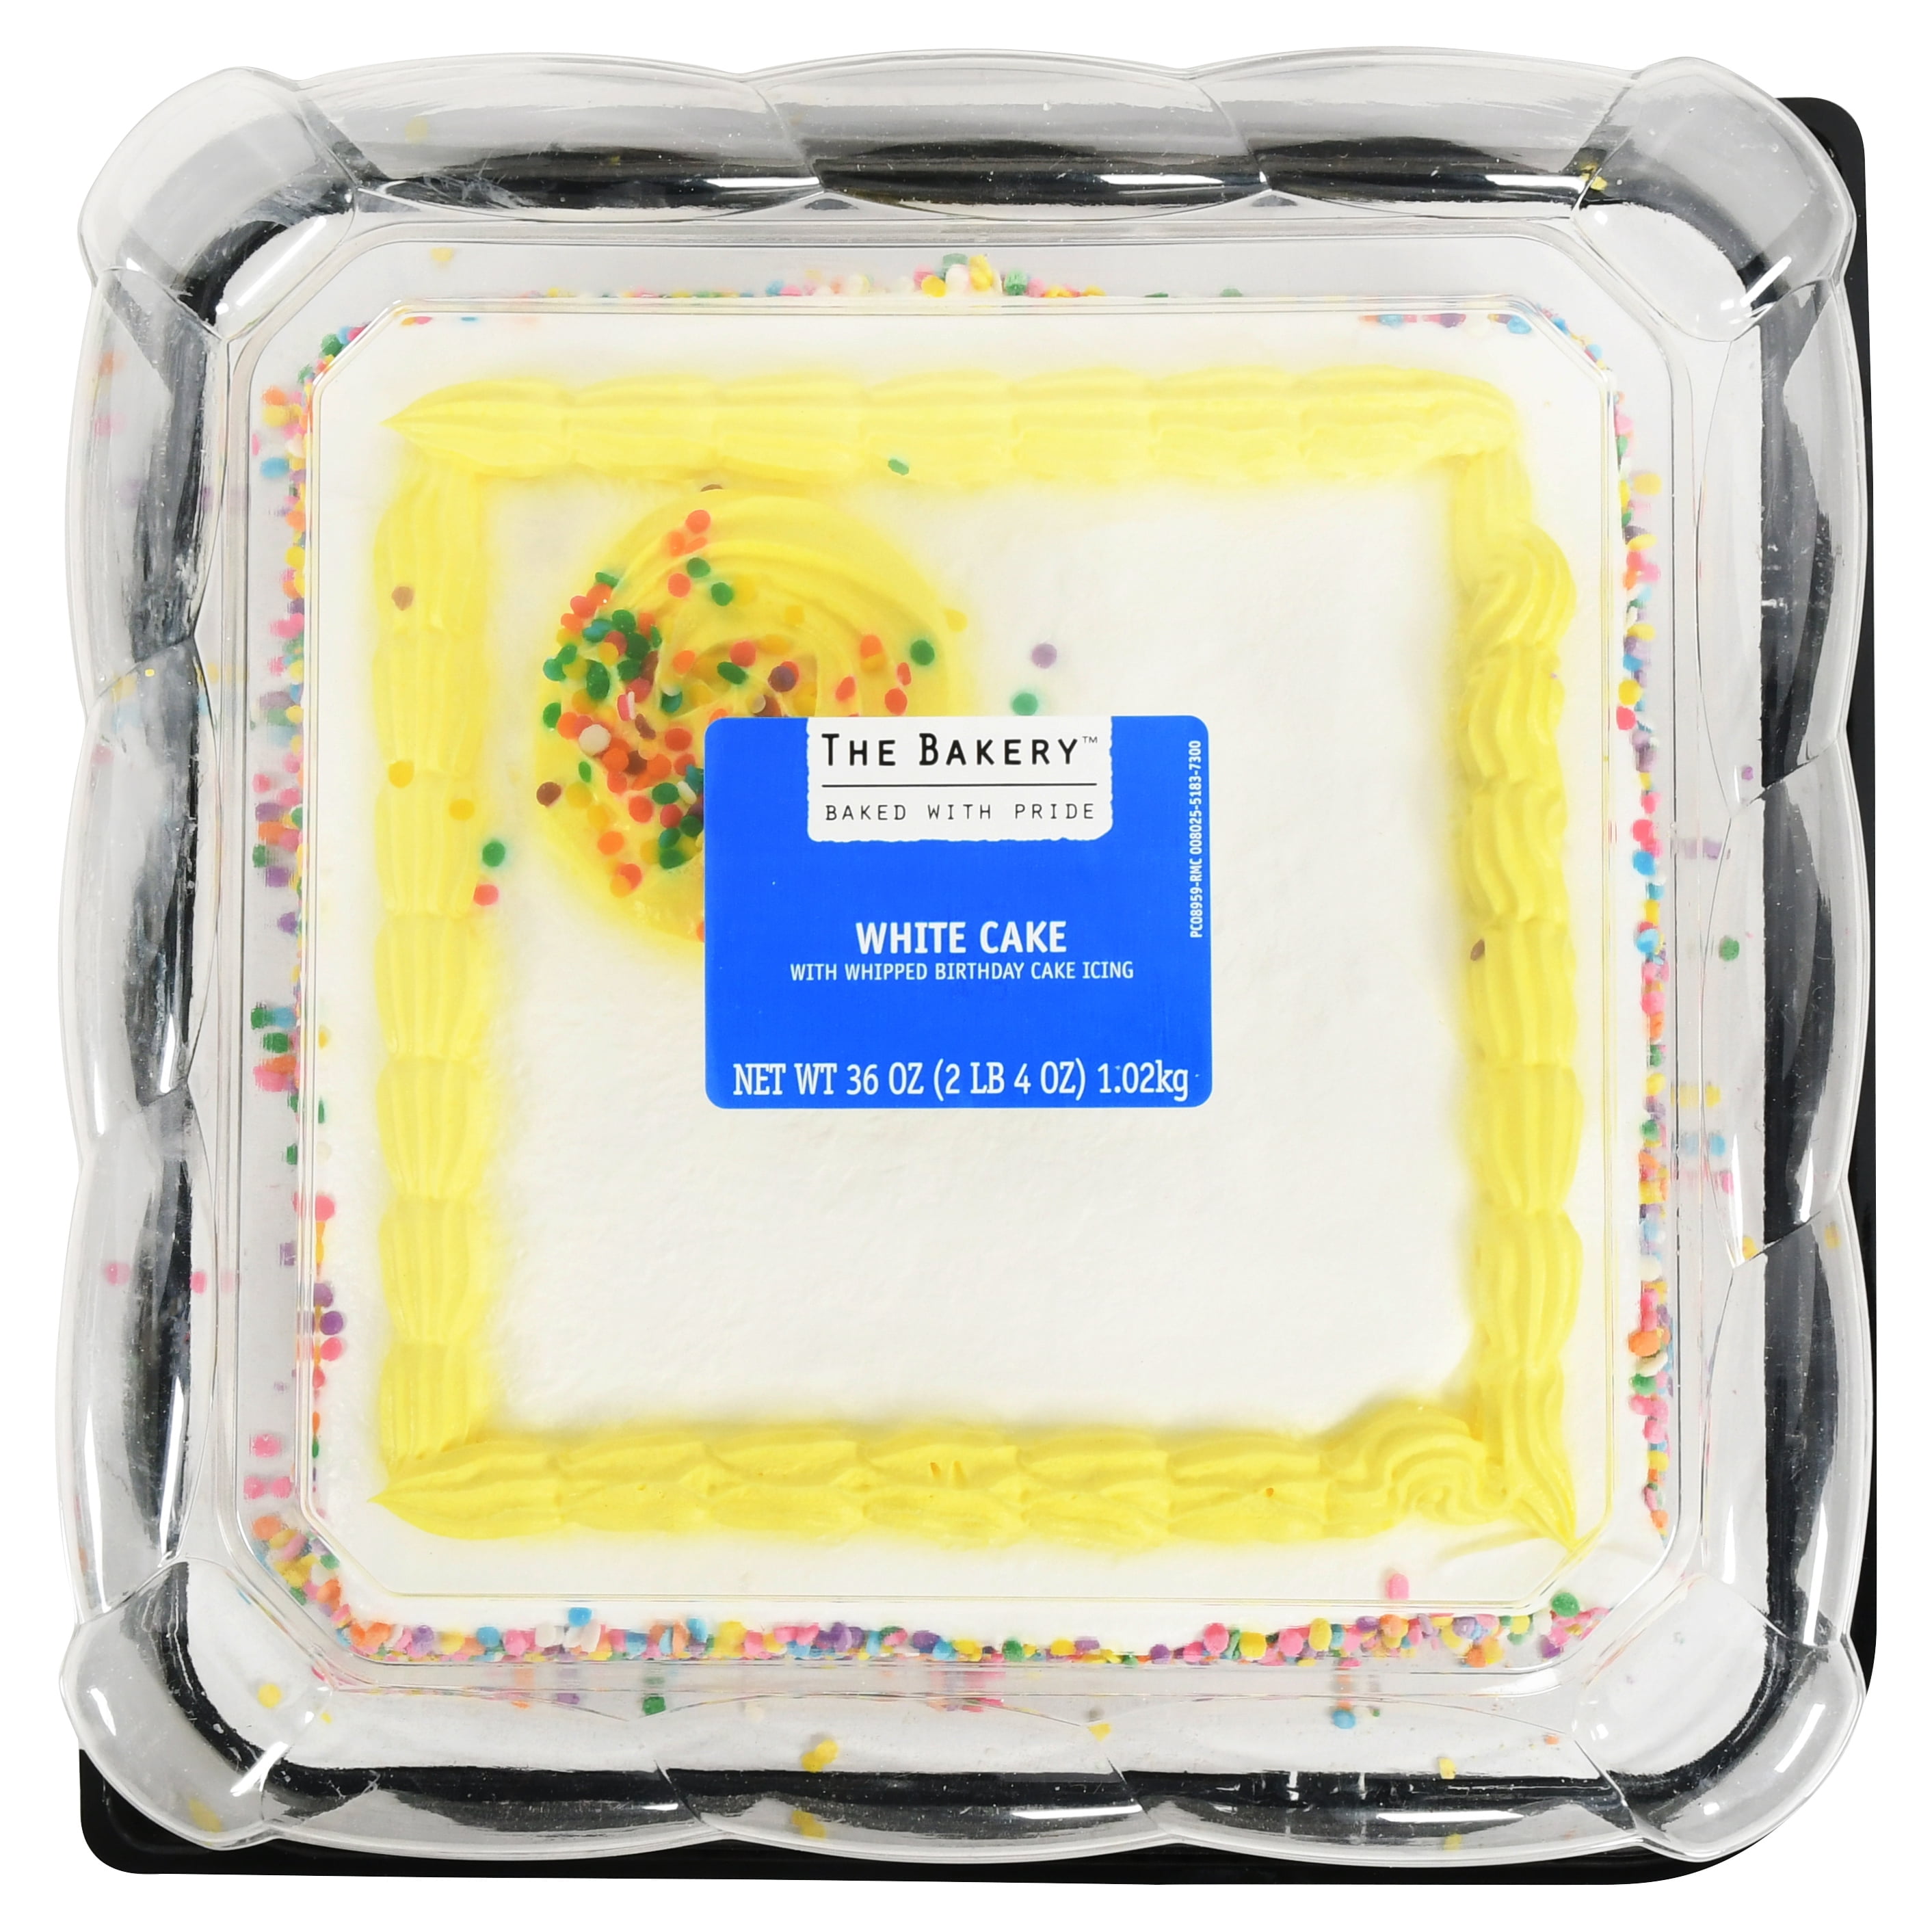 The Bakery White Cake with Whipped Birthday Cake Icing, 36 oz - Walmart.com - Walmart.com